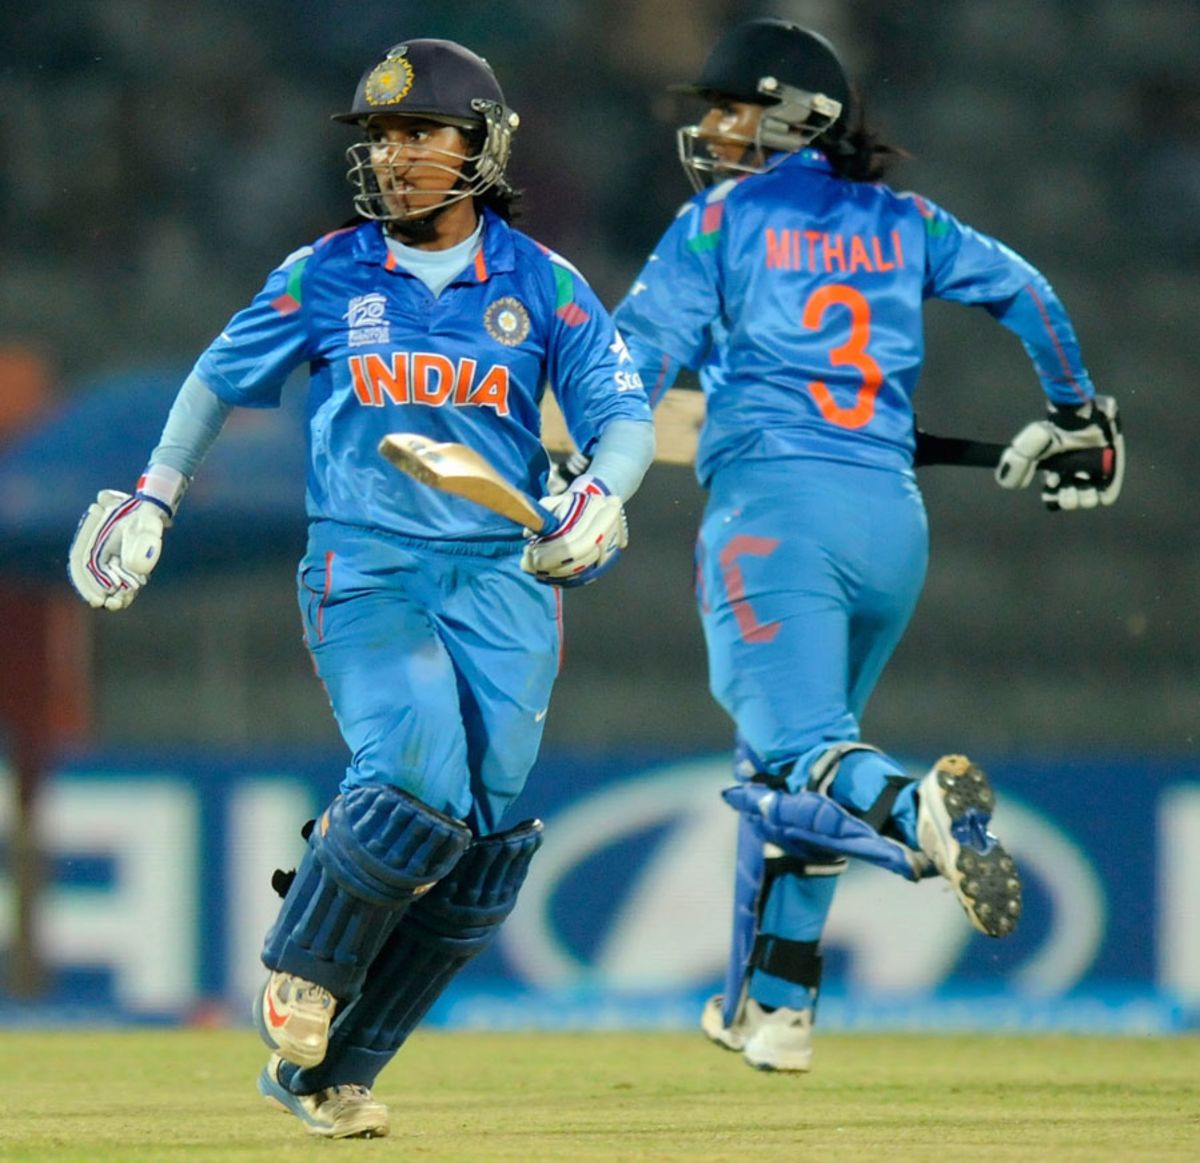 Both India openers, Poonam Raut and Mithali Raj, hit half-centuries